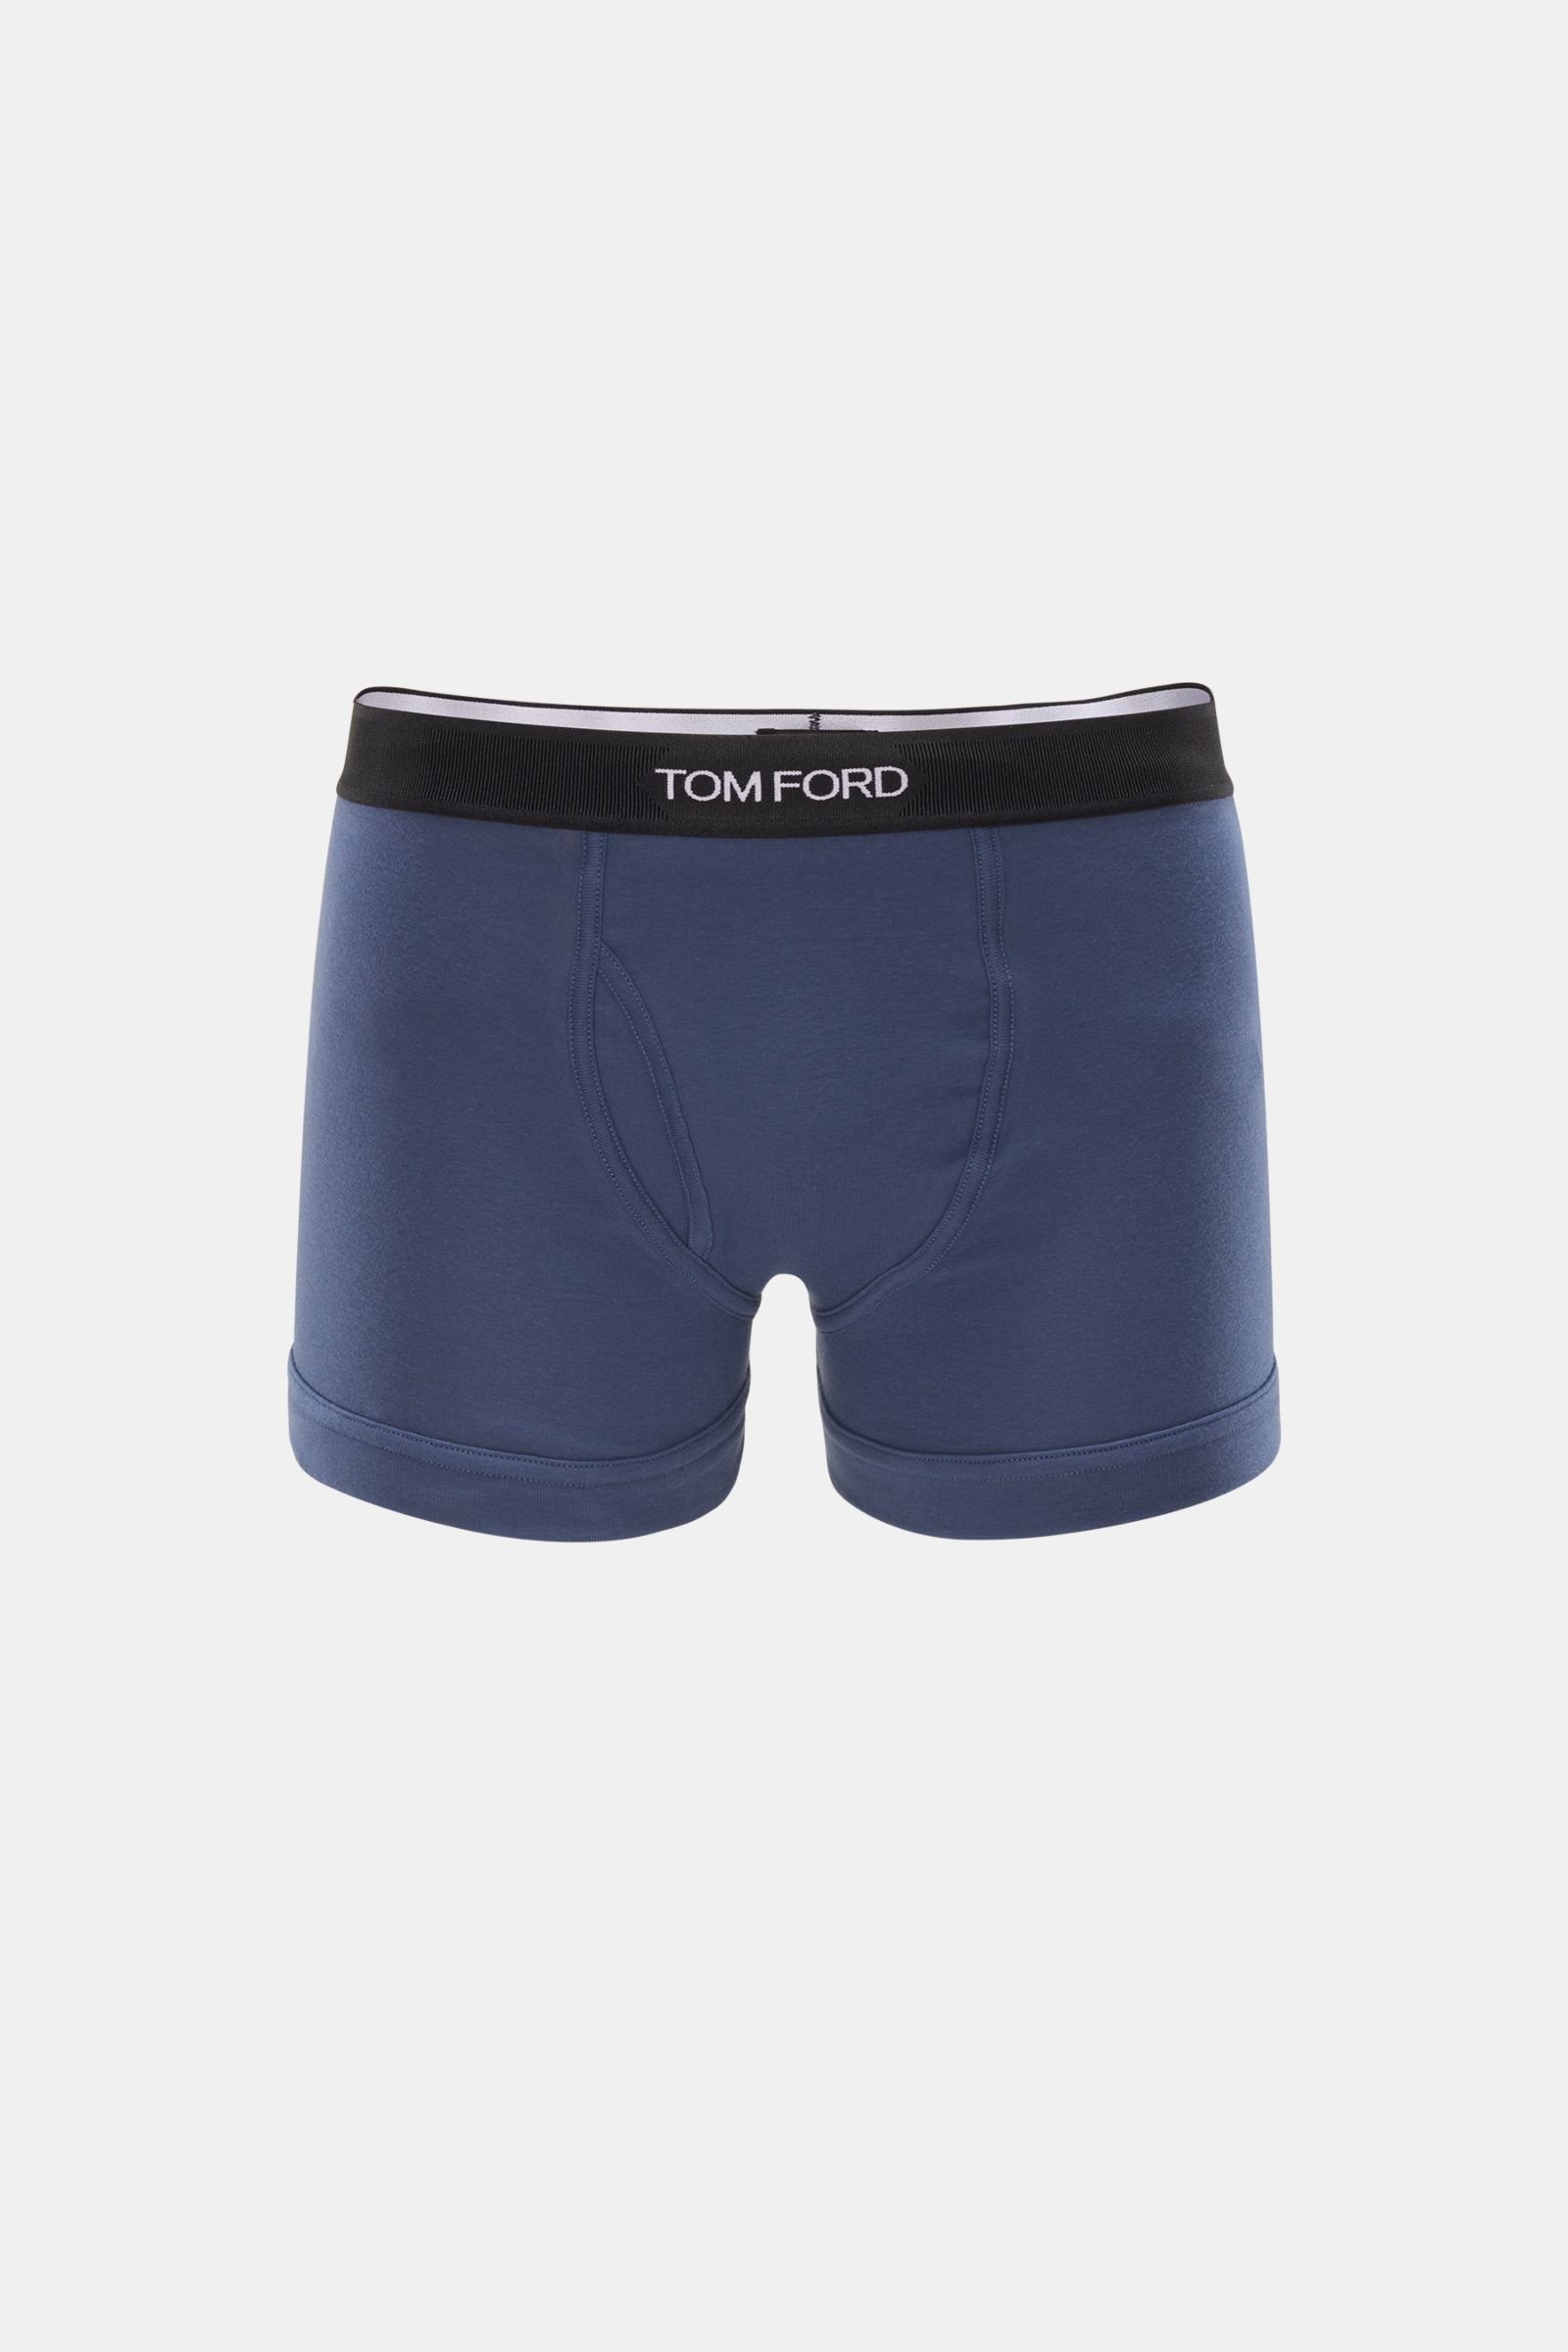 Boxer shorts grey-blue